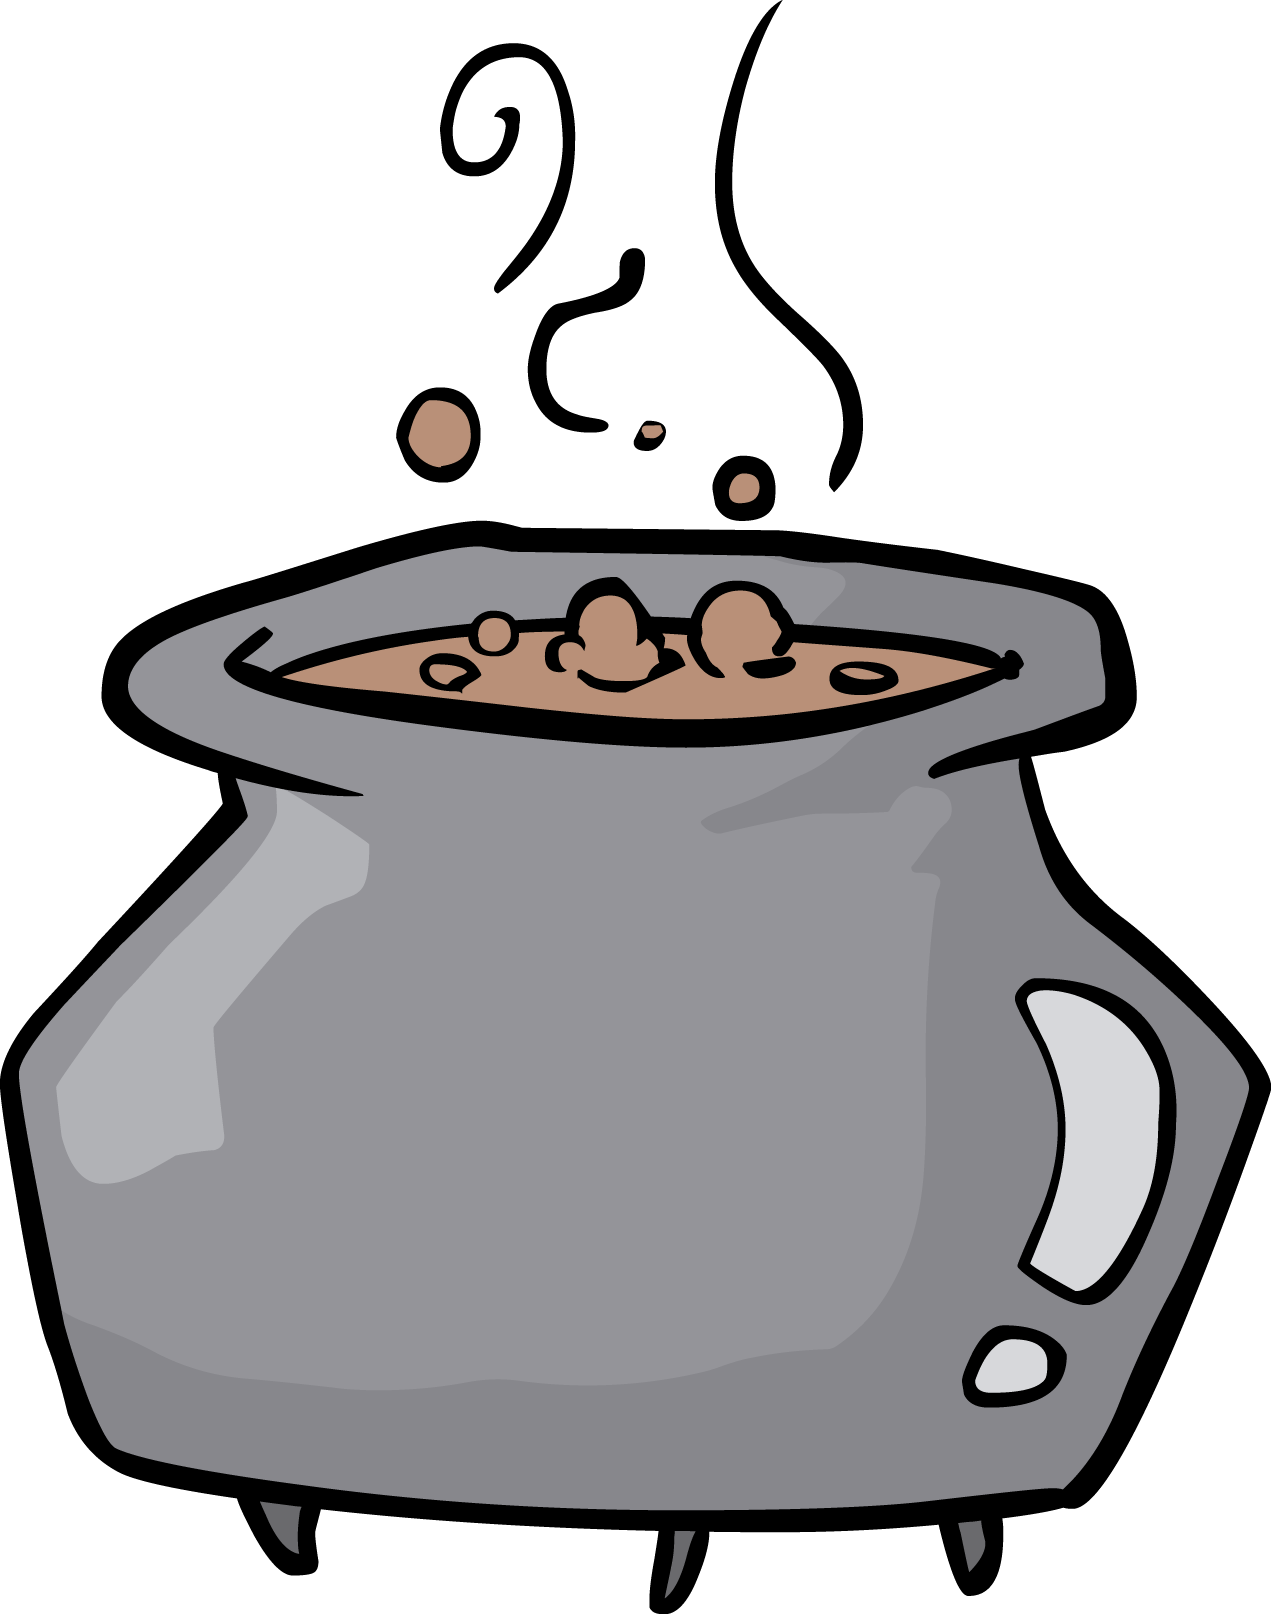 Adrh5h8cvtmedfx5ohxwis9n - Boiling Water Cartoon Png (1271x1614)